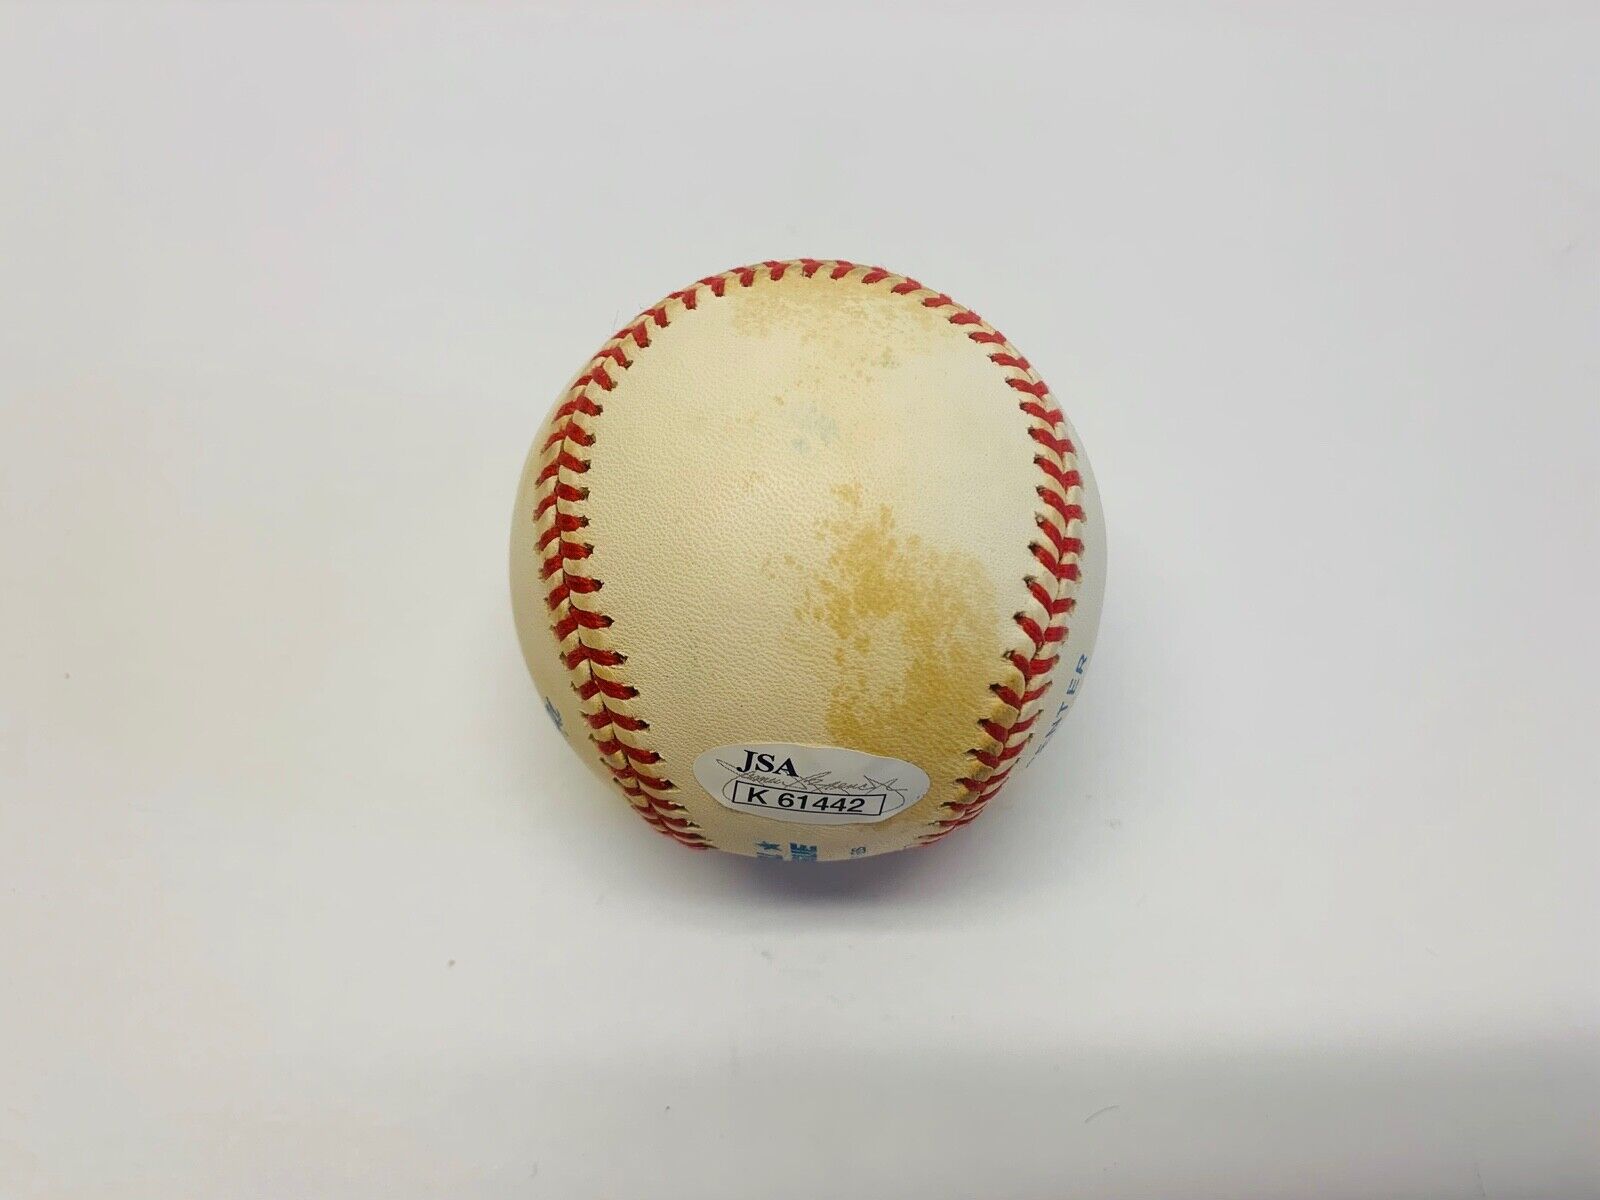 Hideki Irabu autographed signed Baseball JSA K61442 New York Yankees D2011